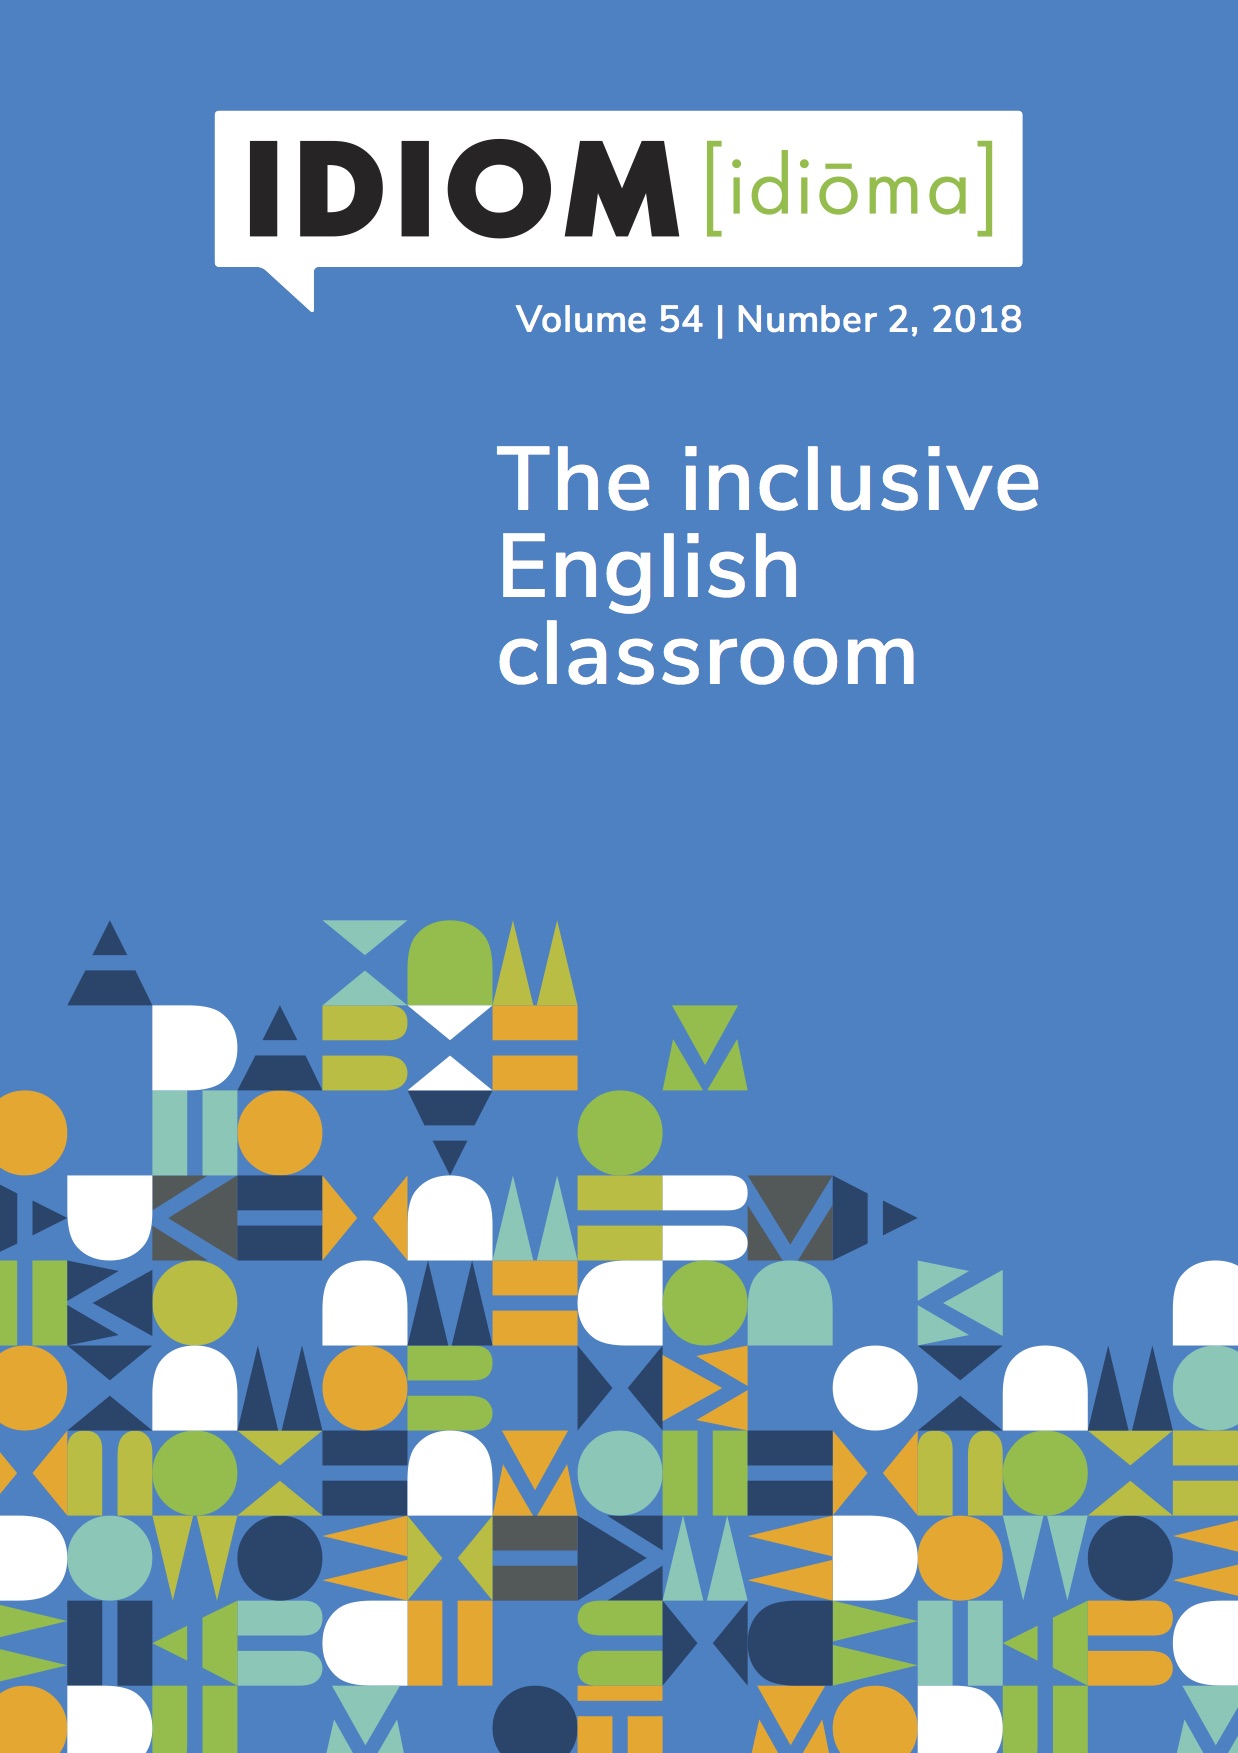 Idiom Volume 54 No 2, 2018 - The inclusive English classroom